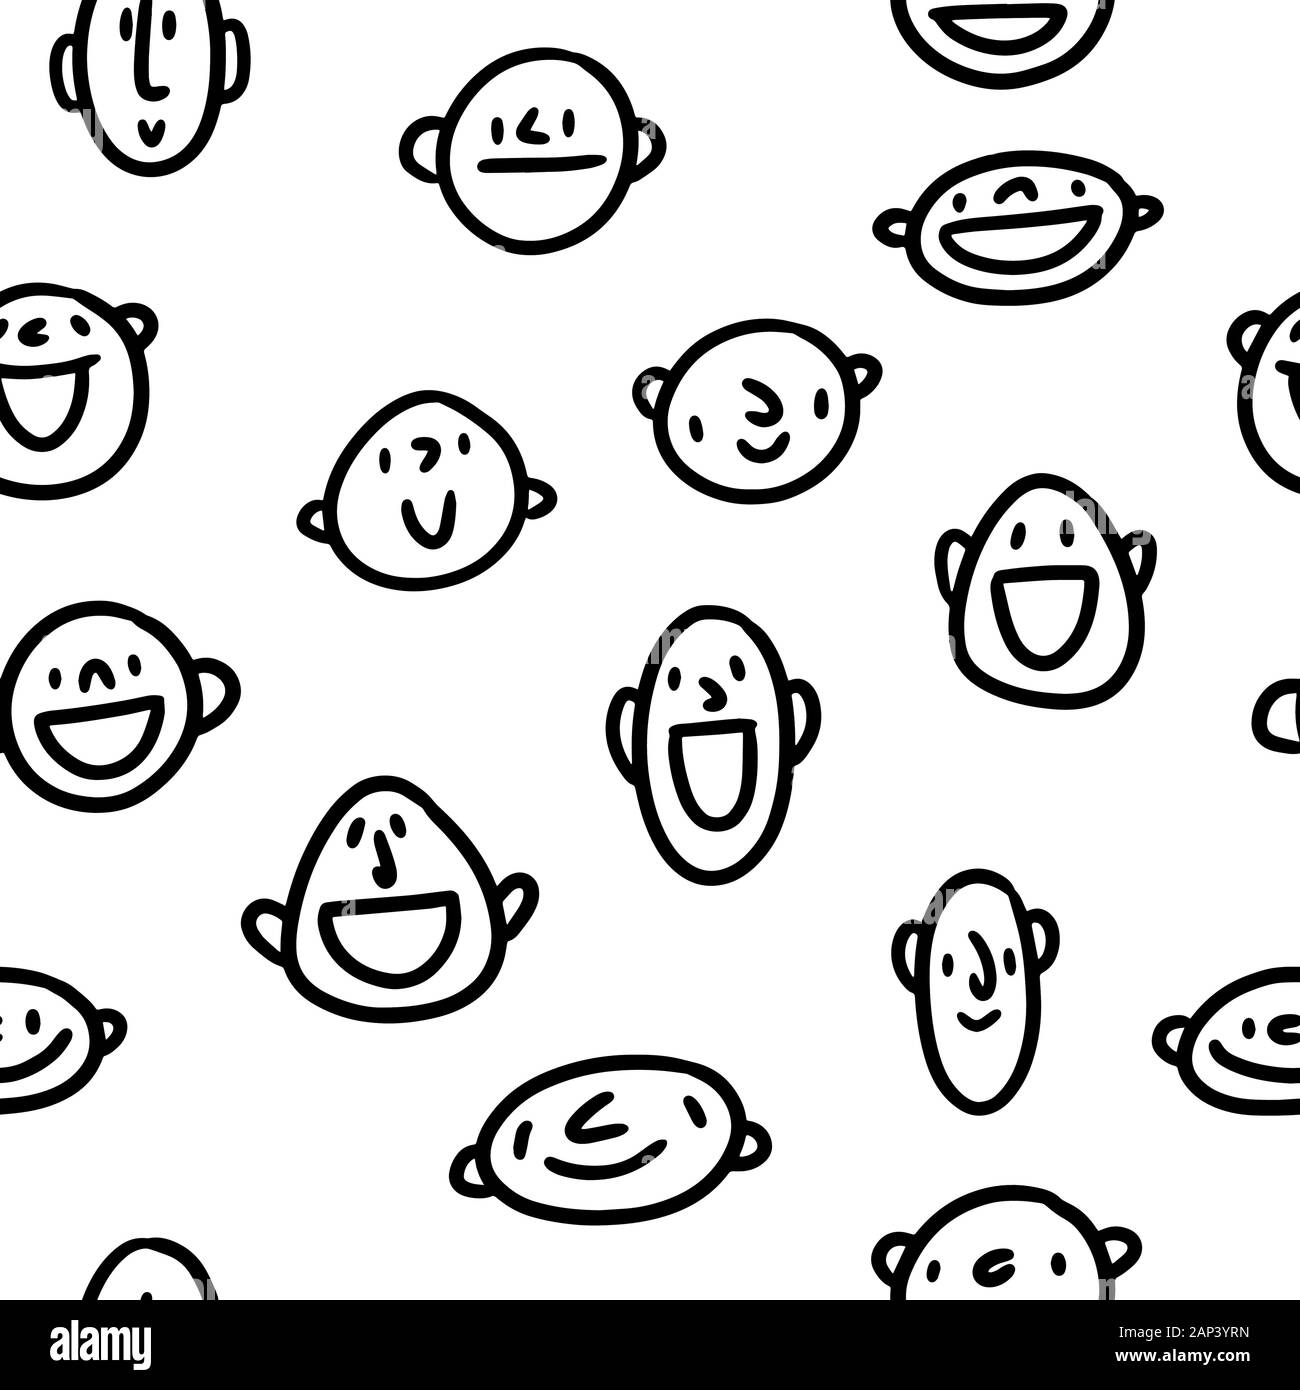 Emoji Black and White Stock Photos & Images - Alamy